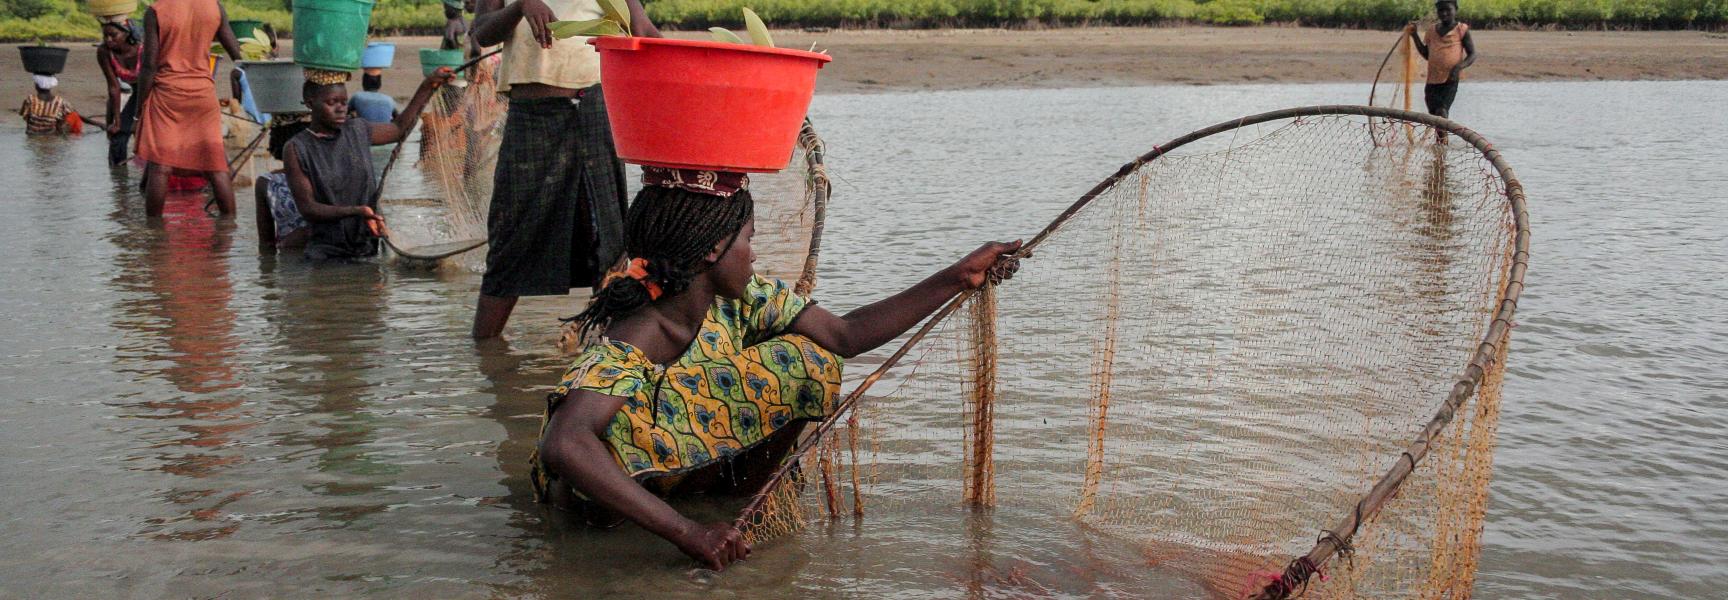 Women fishing in a river in Guinea Bissau